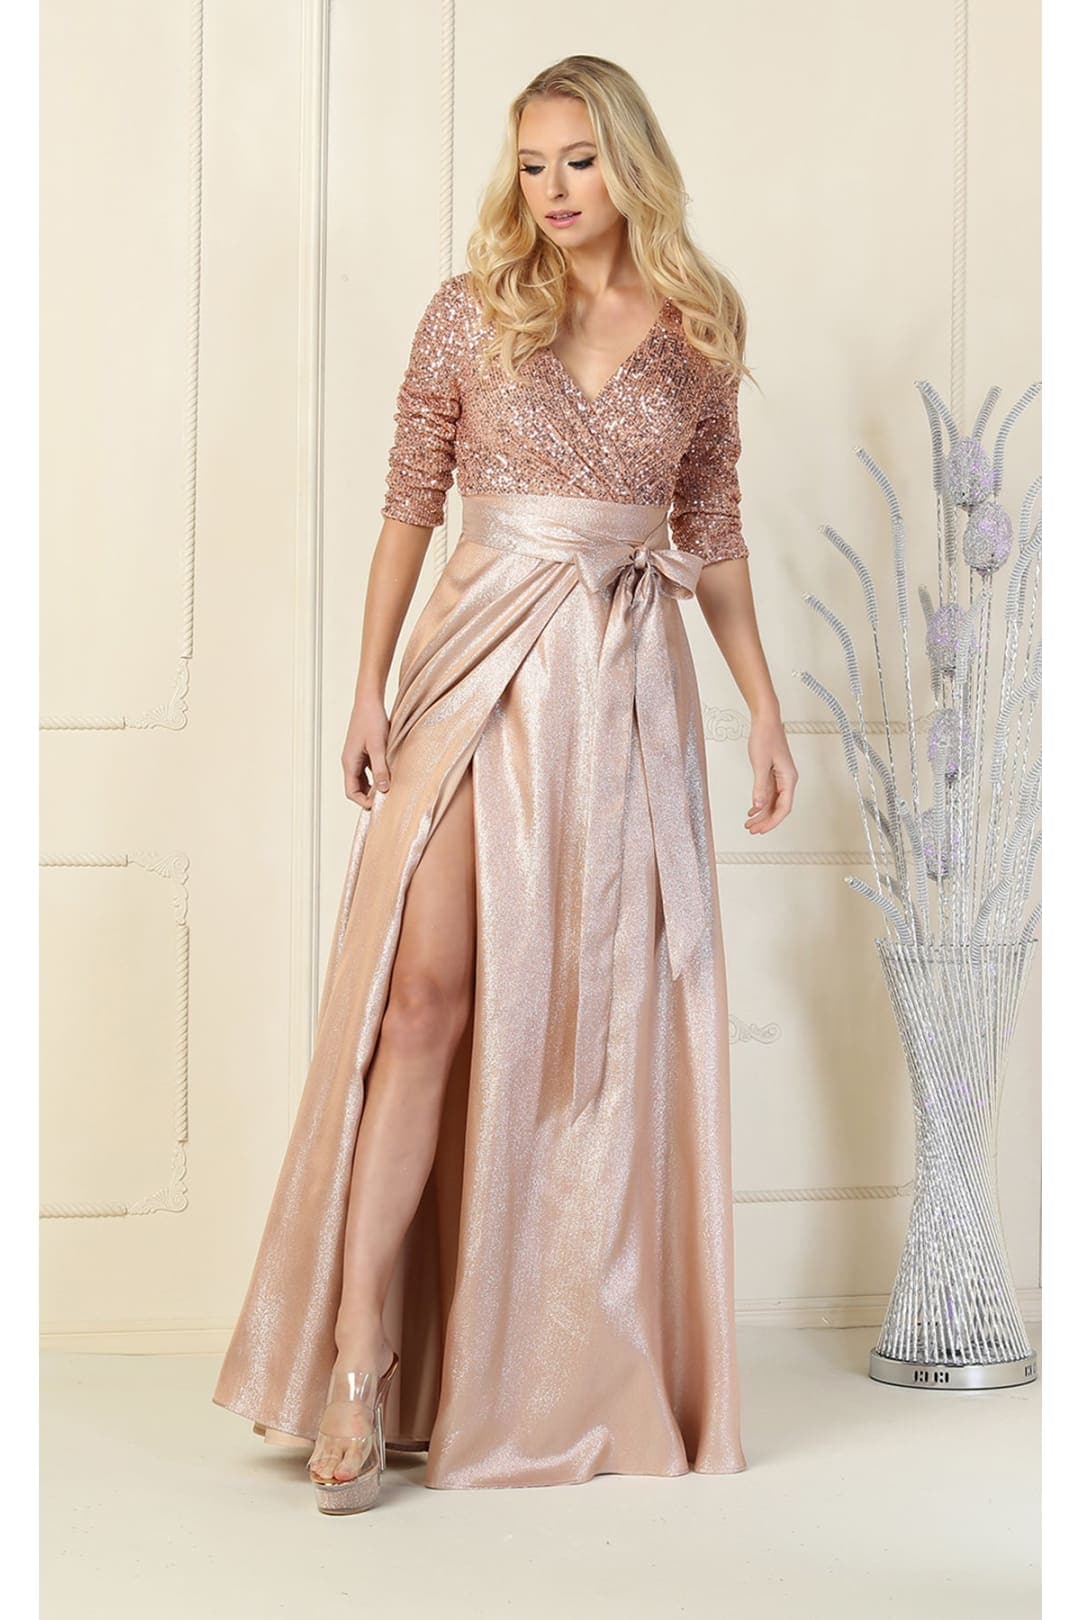 Plus Size Modest Dress - ROSEGOLD / S